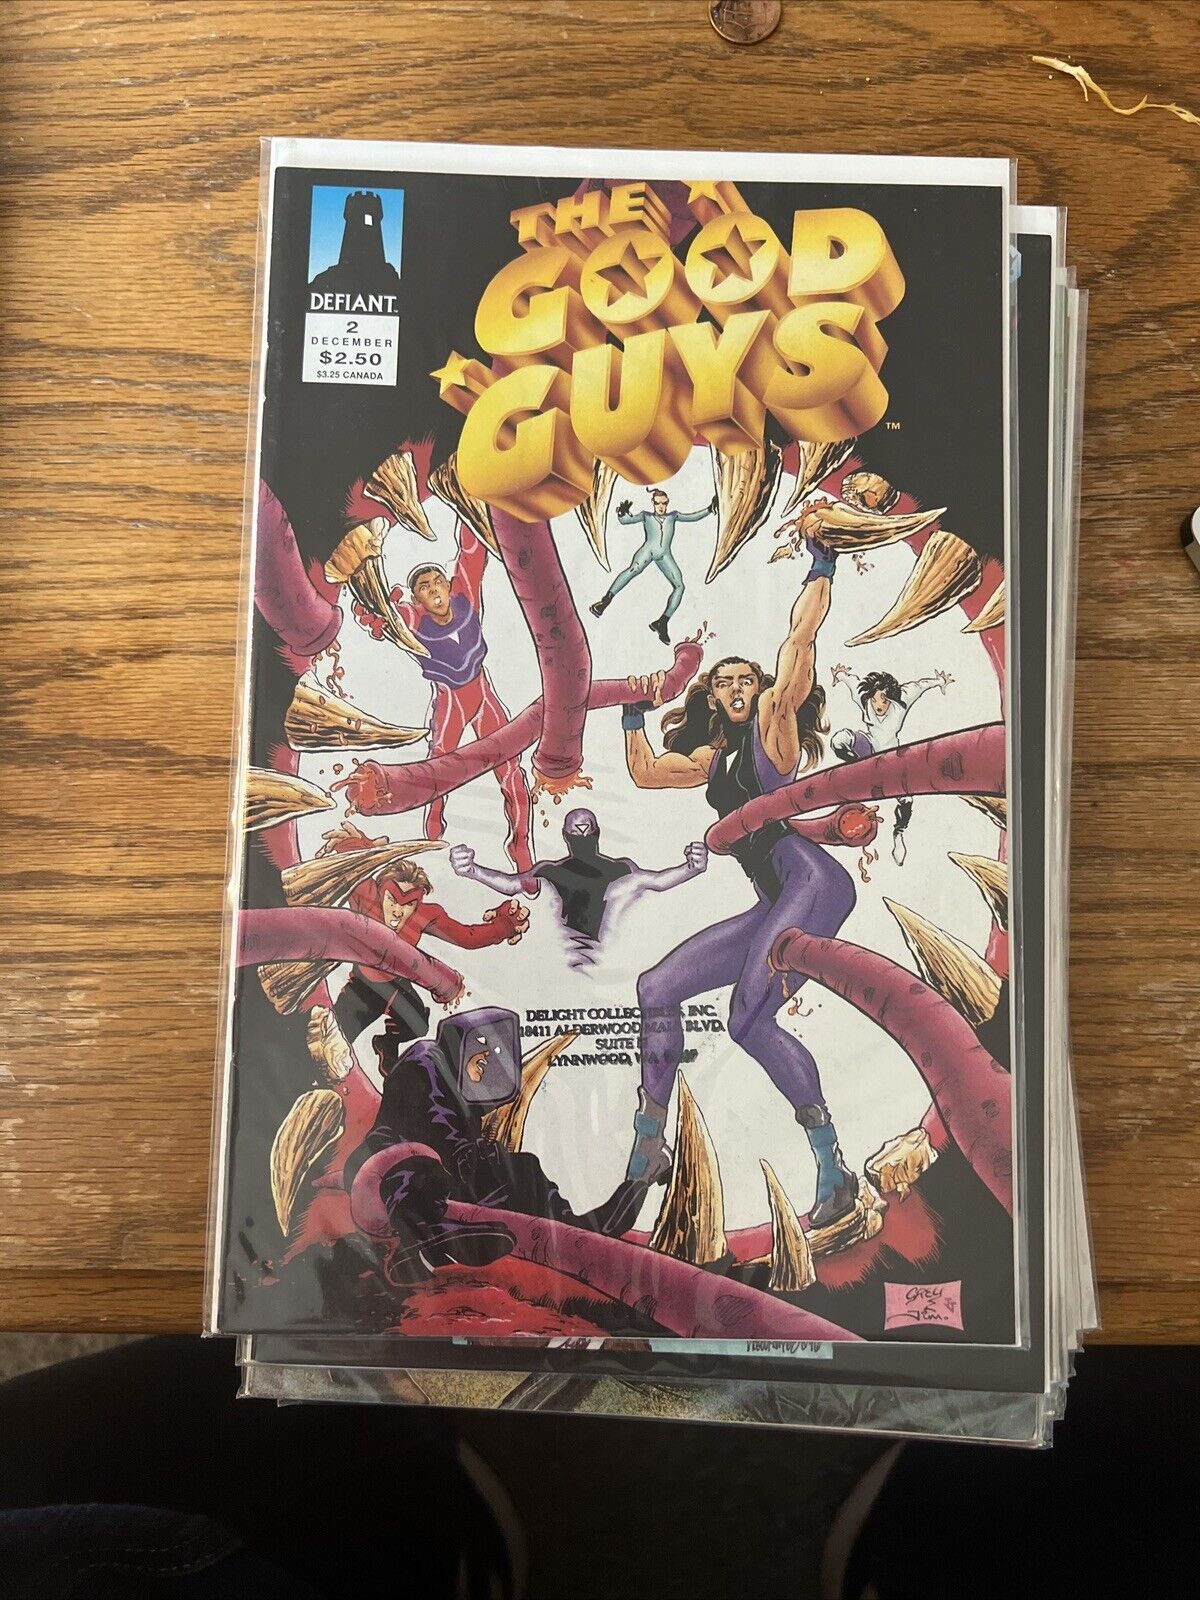 The Good Guys #2 (Defiant Comics, 1990)